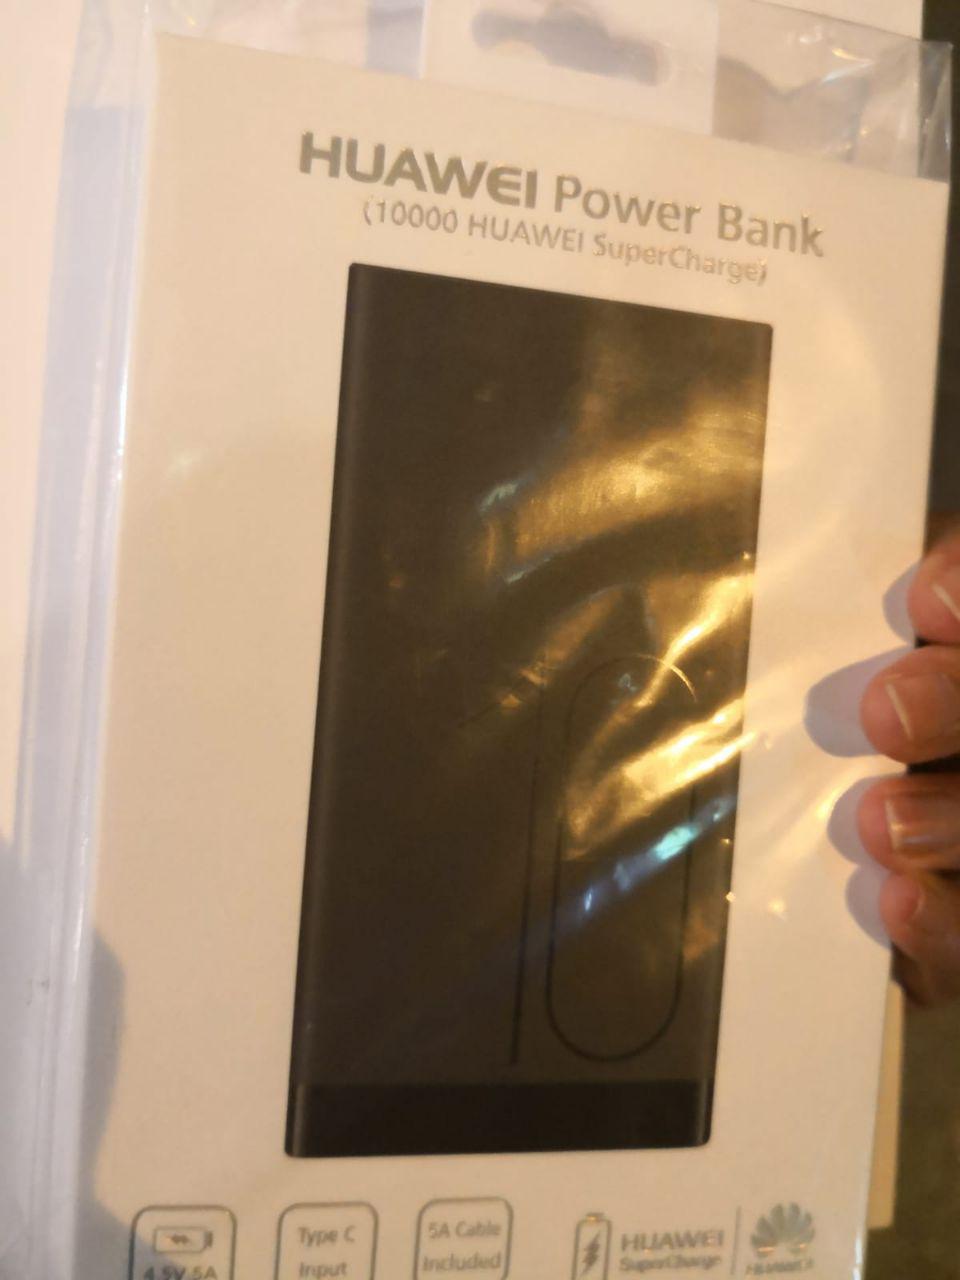 Huawei Gifting Free Power Banks To Apple Fans